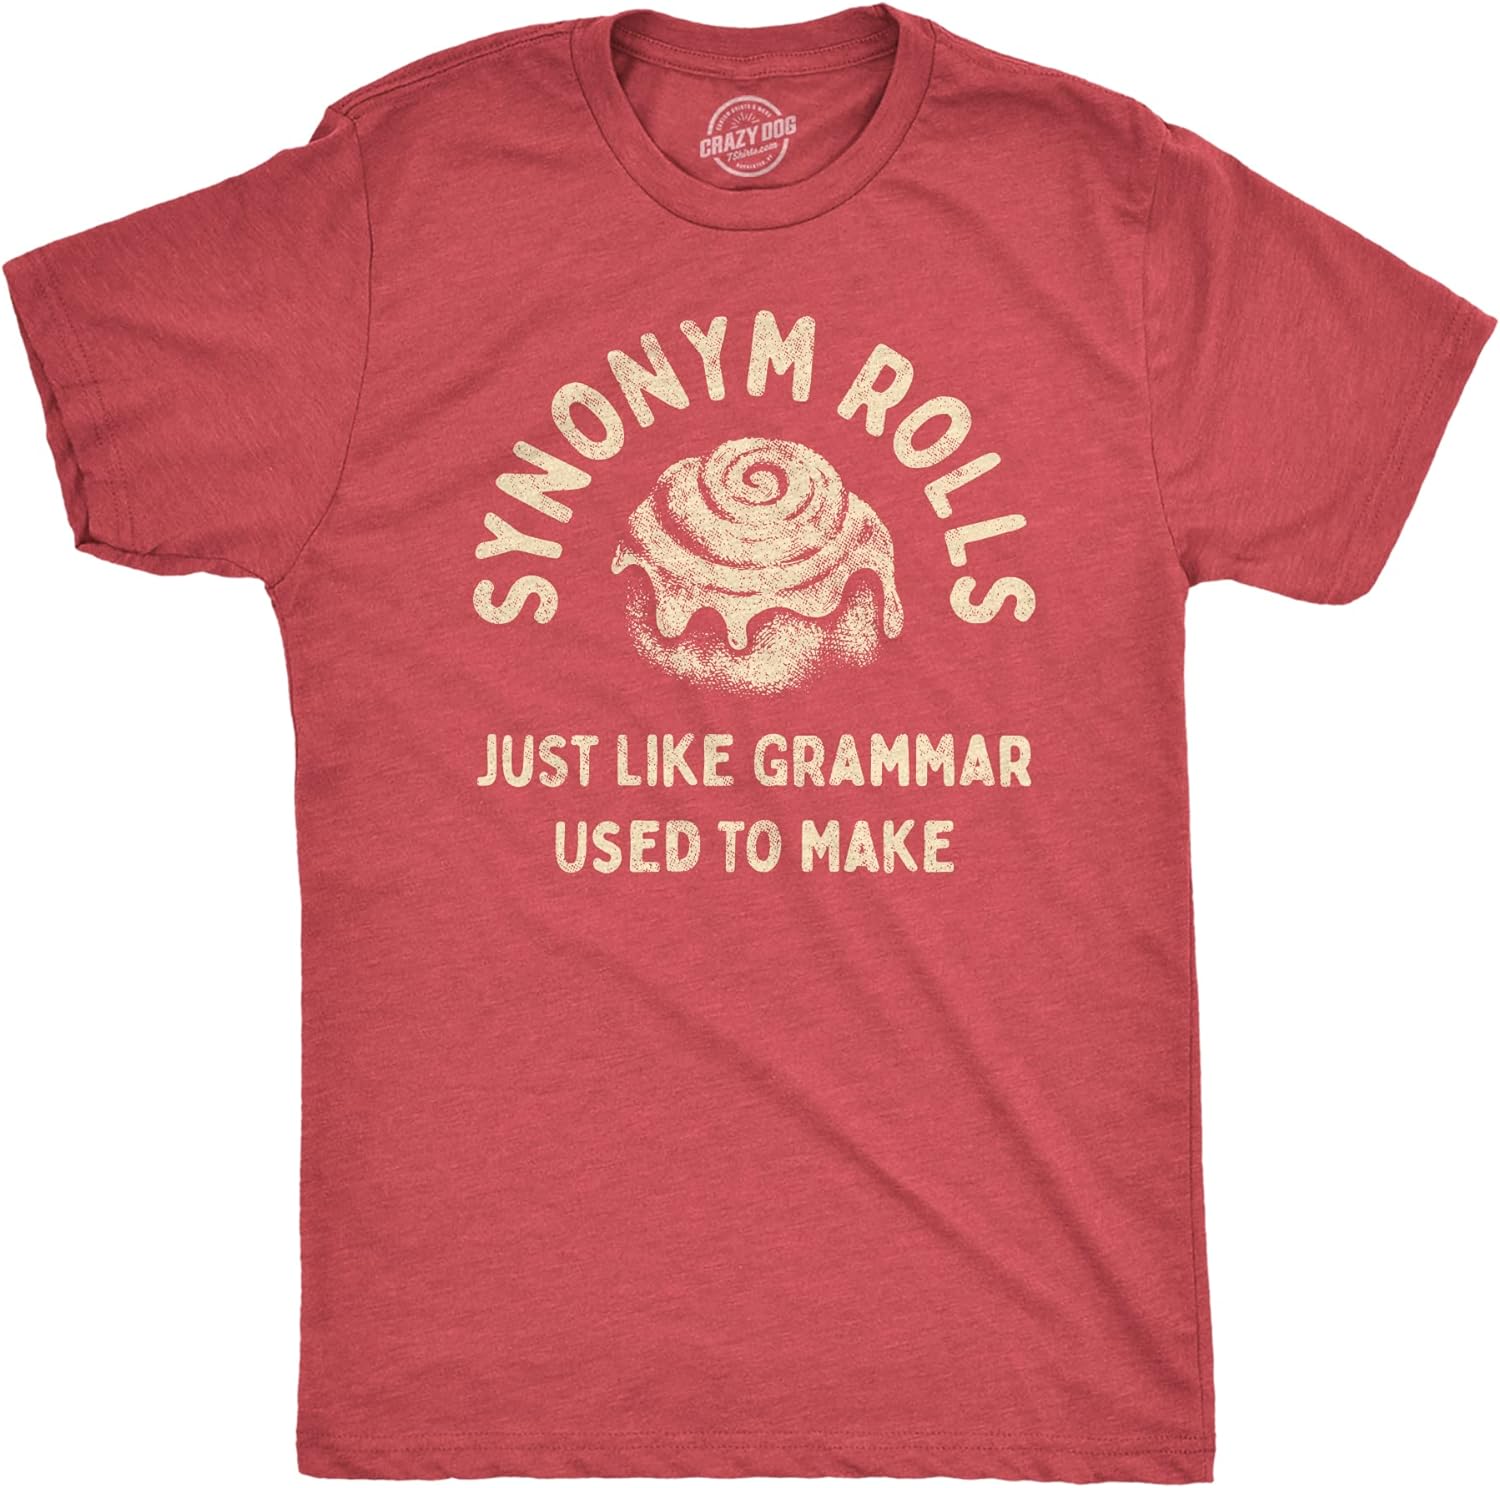 Mens Synonym Rolls T Shirt Review